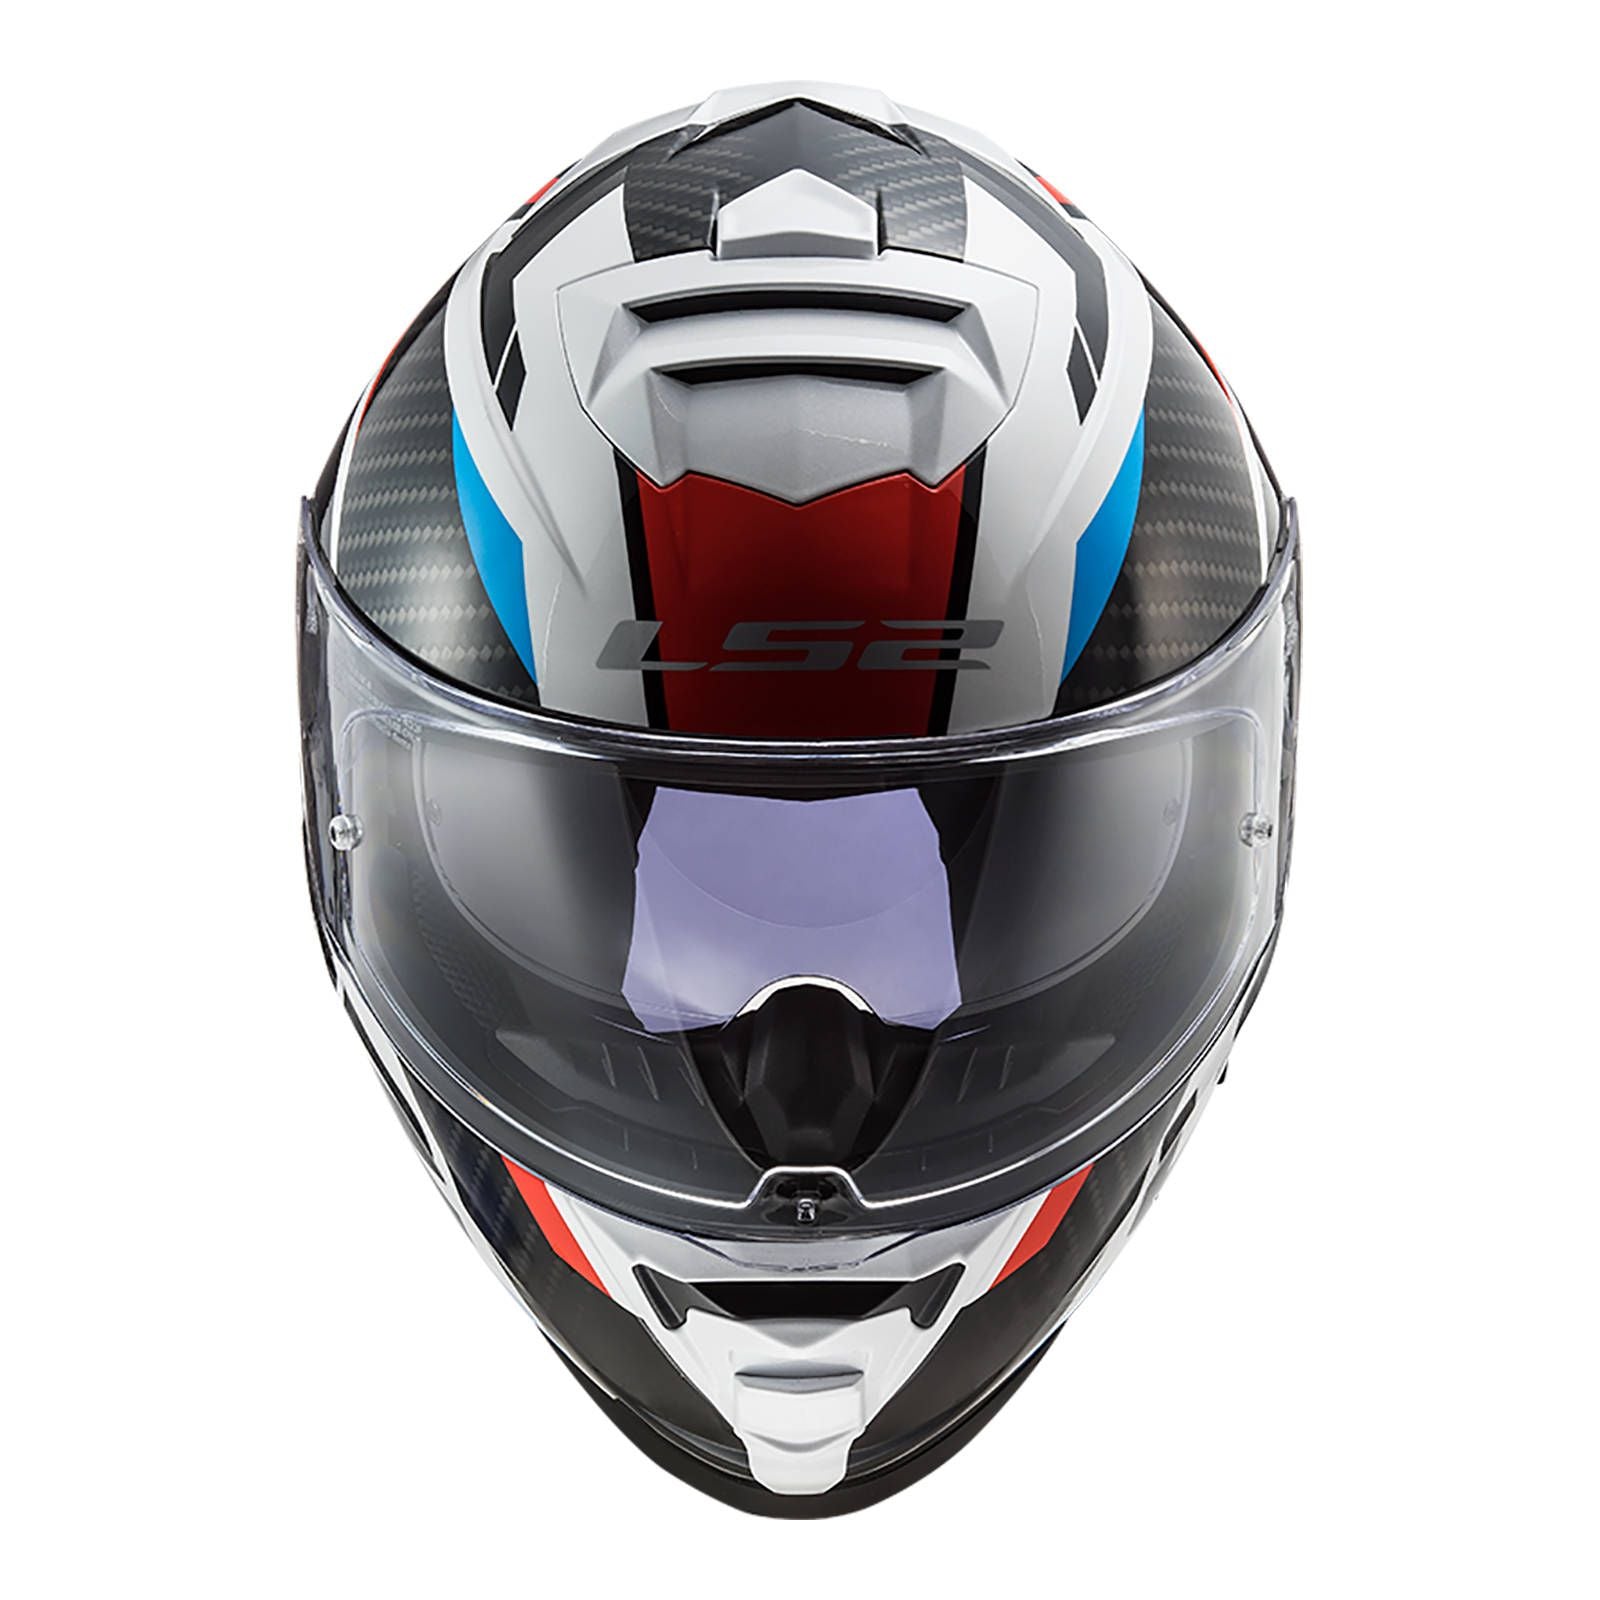 New LS2 FF800 Storm Racer Helmet - White / Blue / Red (XL) #LS2FF800RACWBRXL